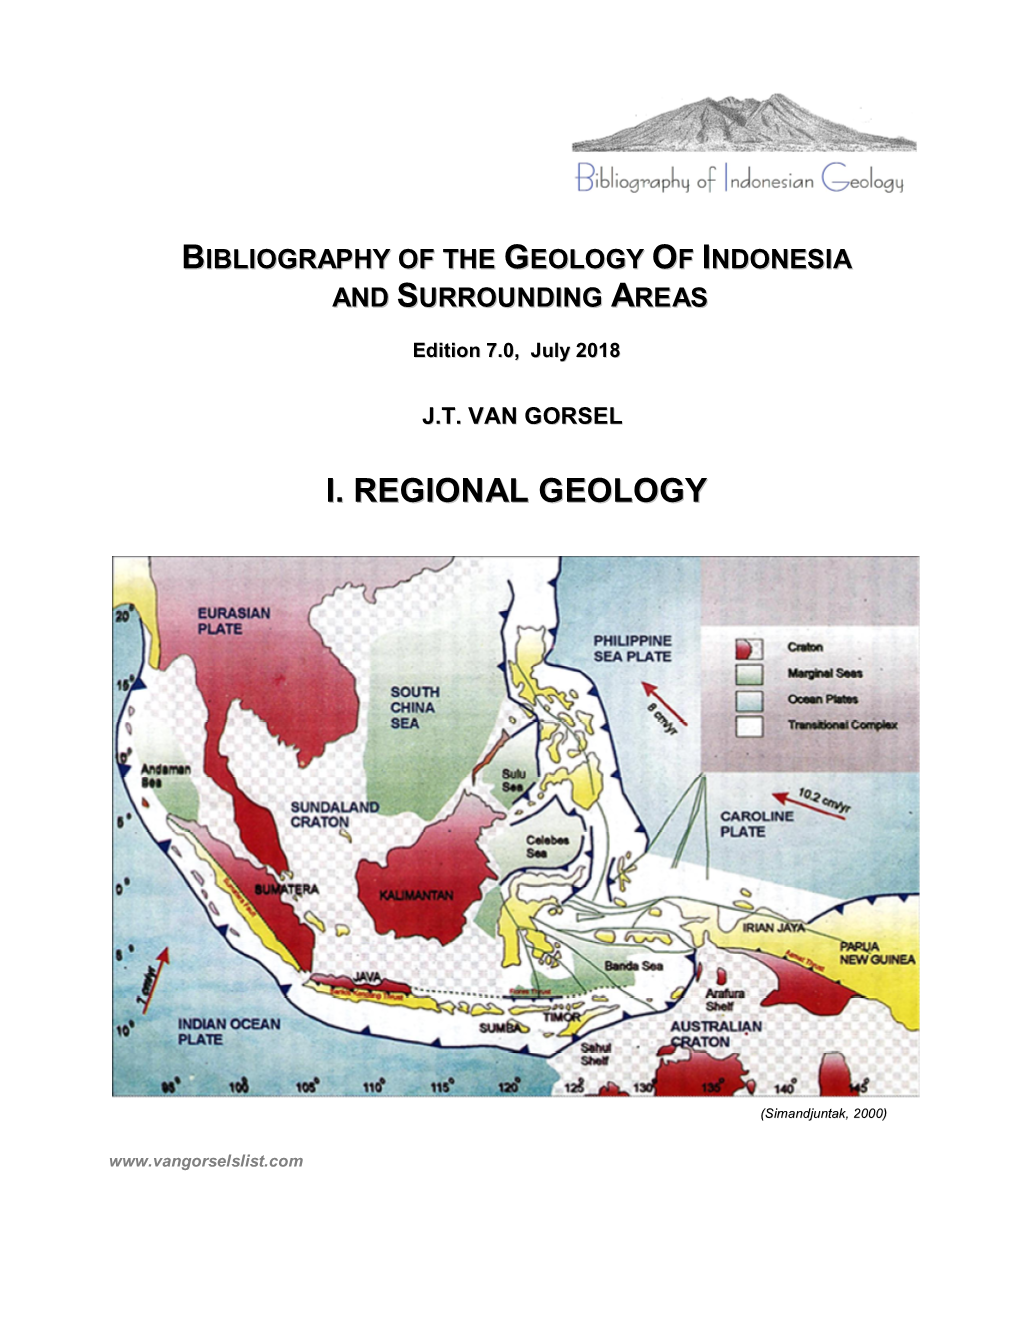 I. Regional Geology